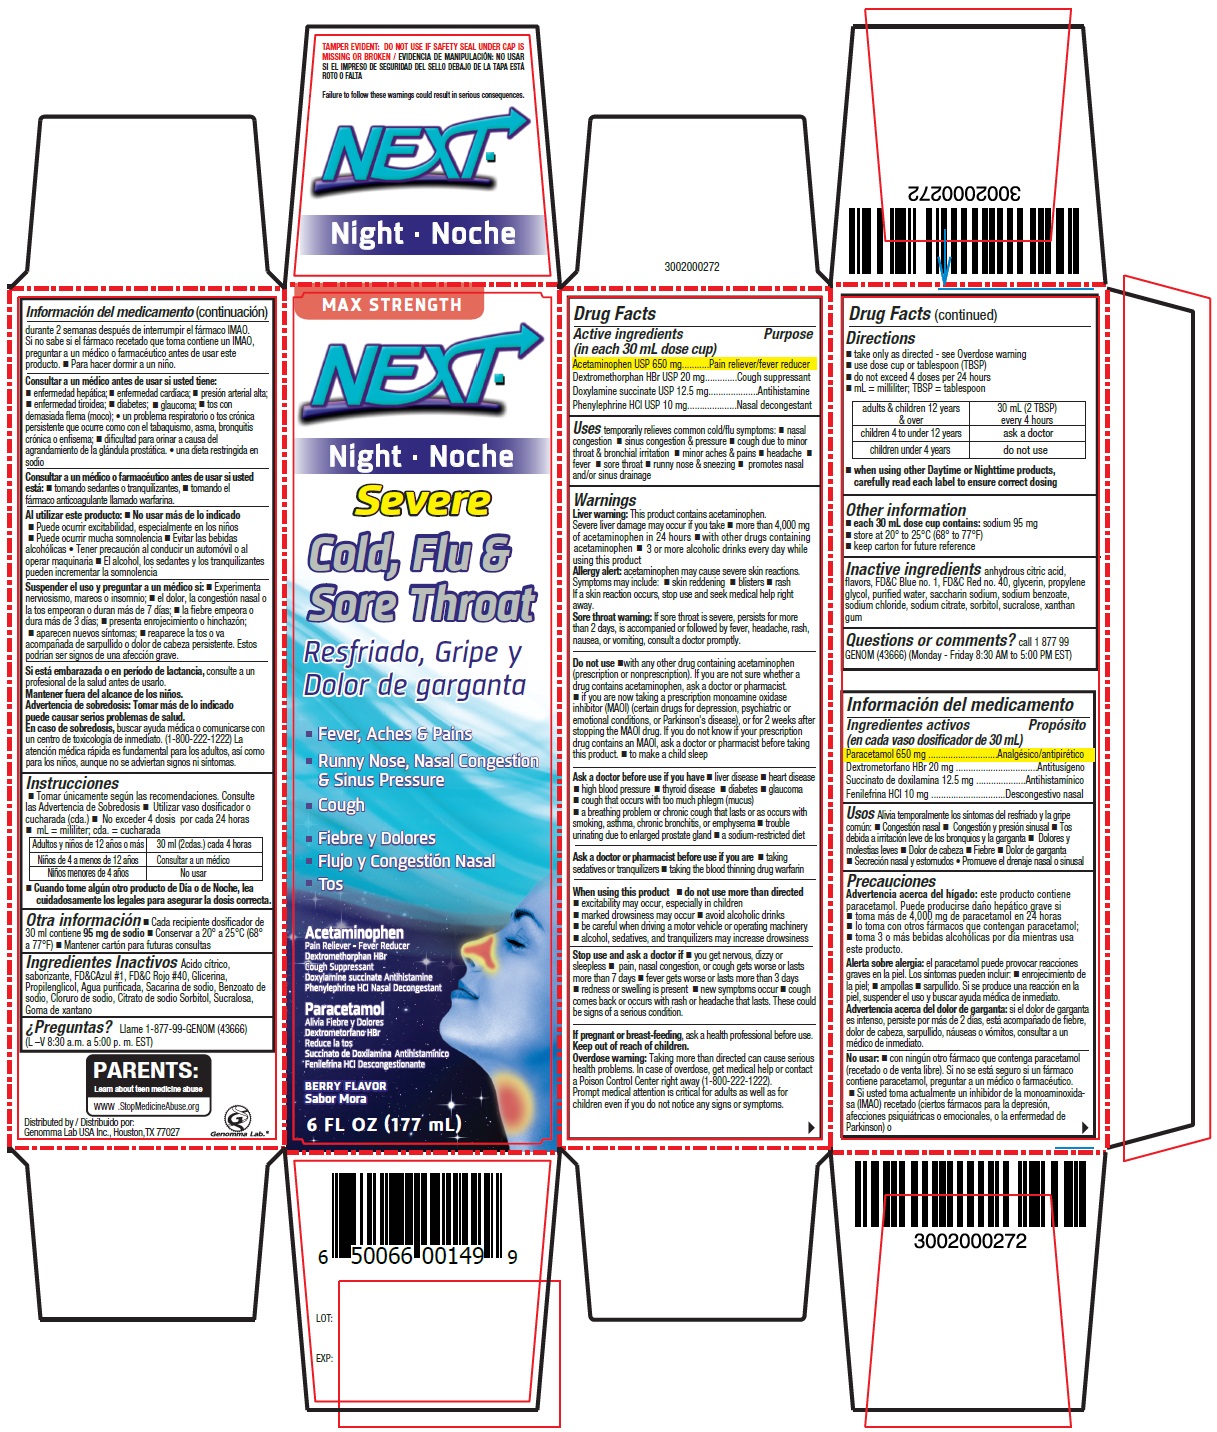 PACKAGE LABEL-PRINCIPAL DISPLAY PANEL - 6 FL OZ (177 mL Carton Label)